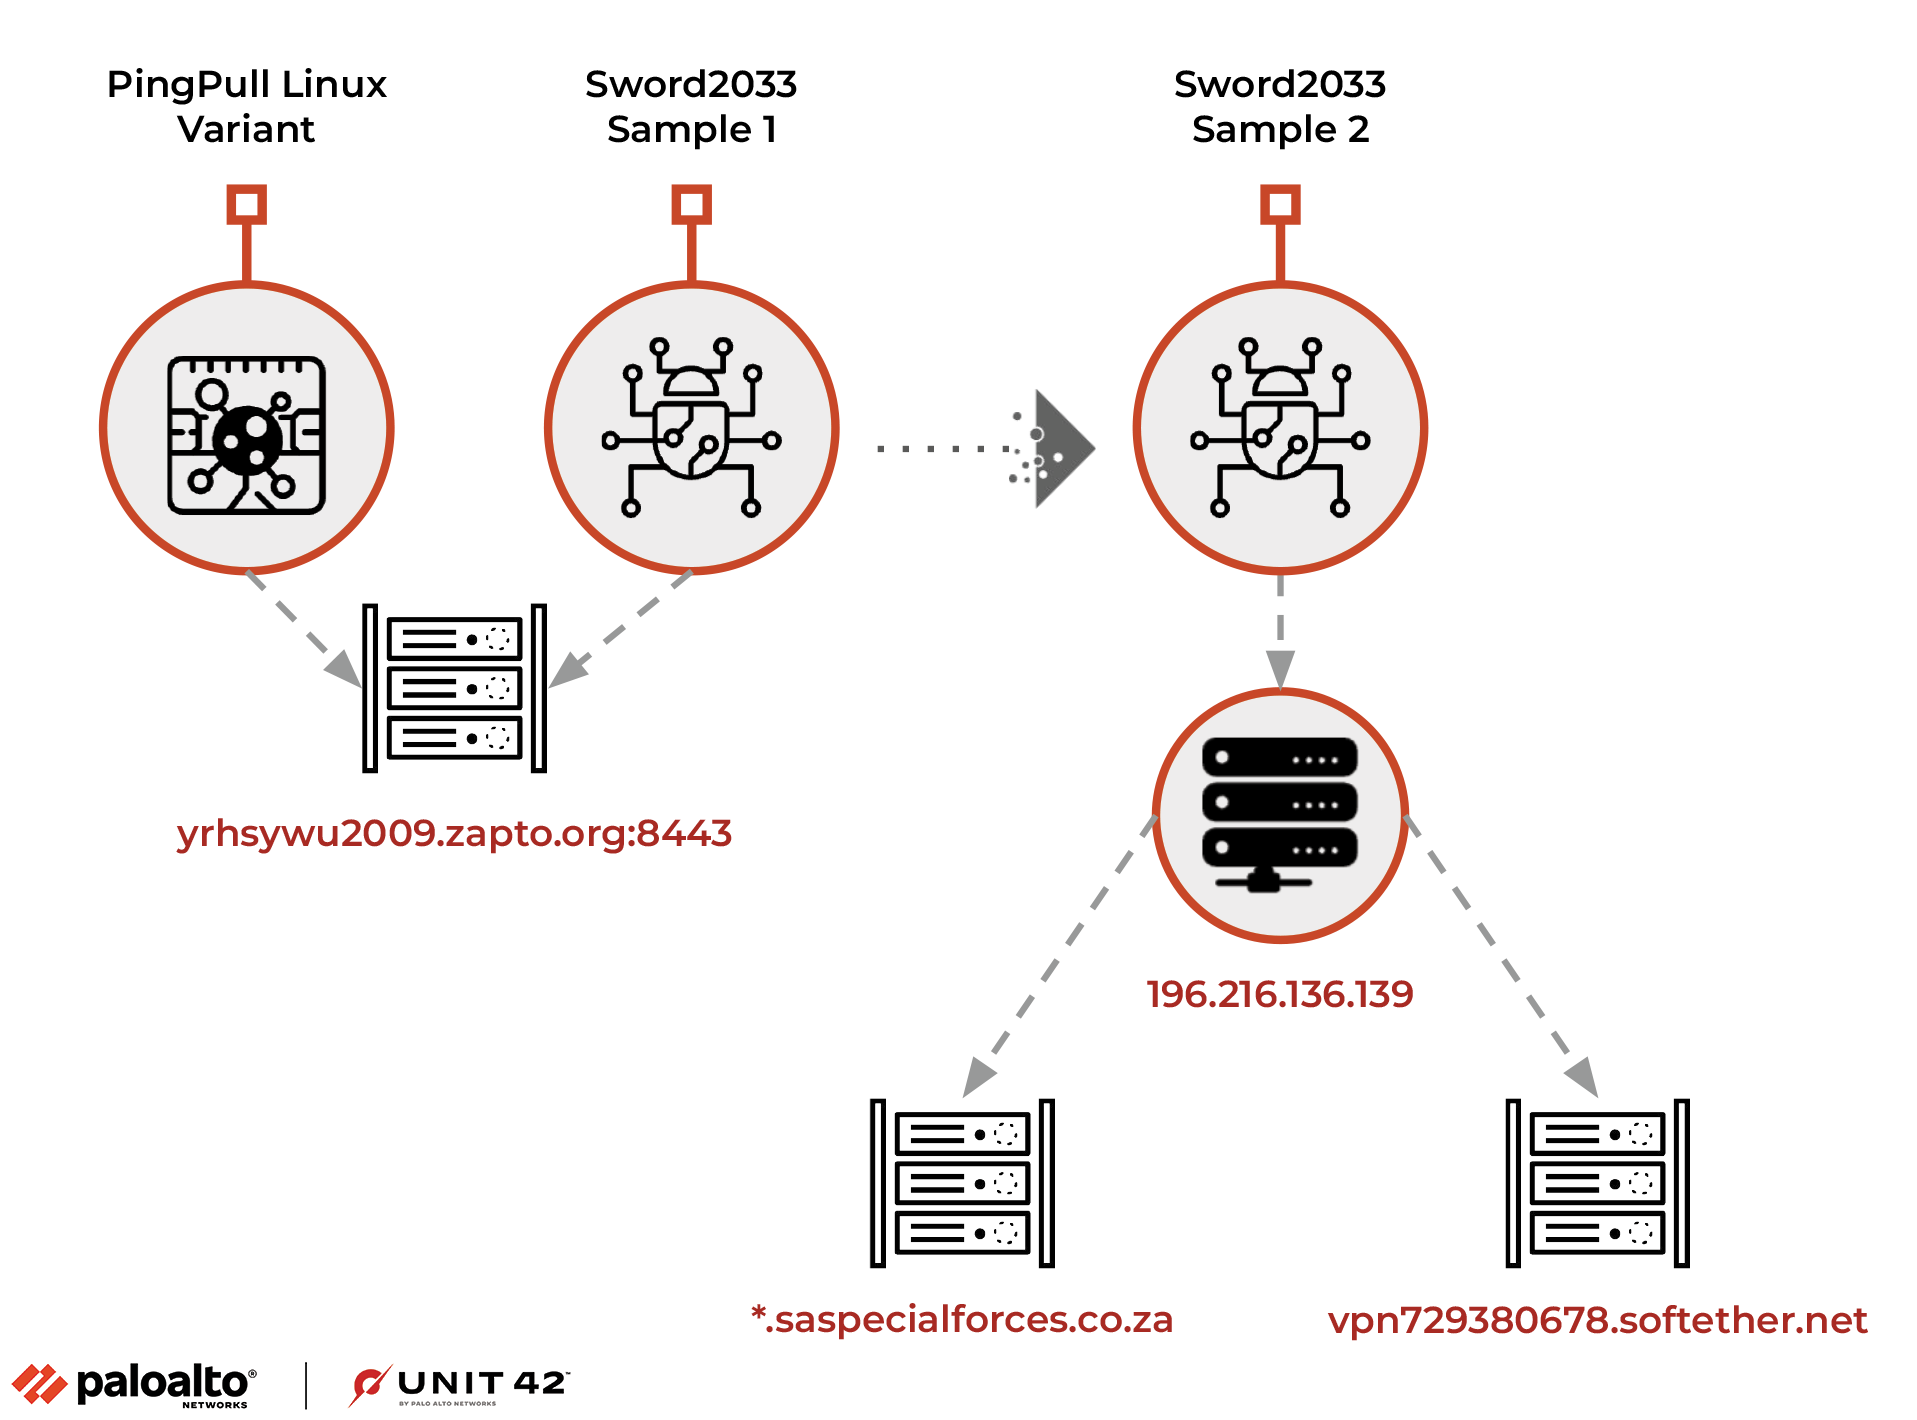 China-linked Alloy Taurus APT uses a Linux variant of PingPull malware